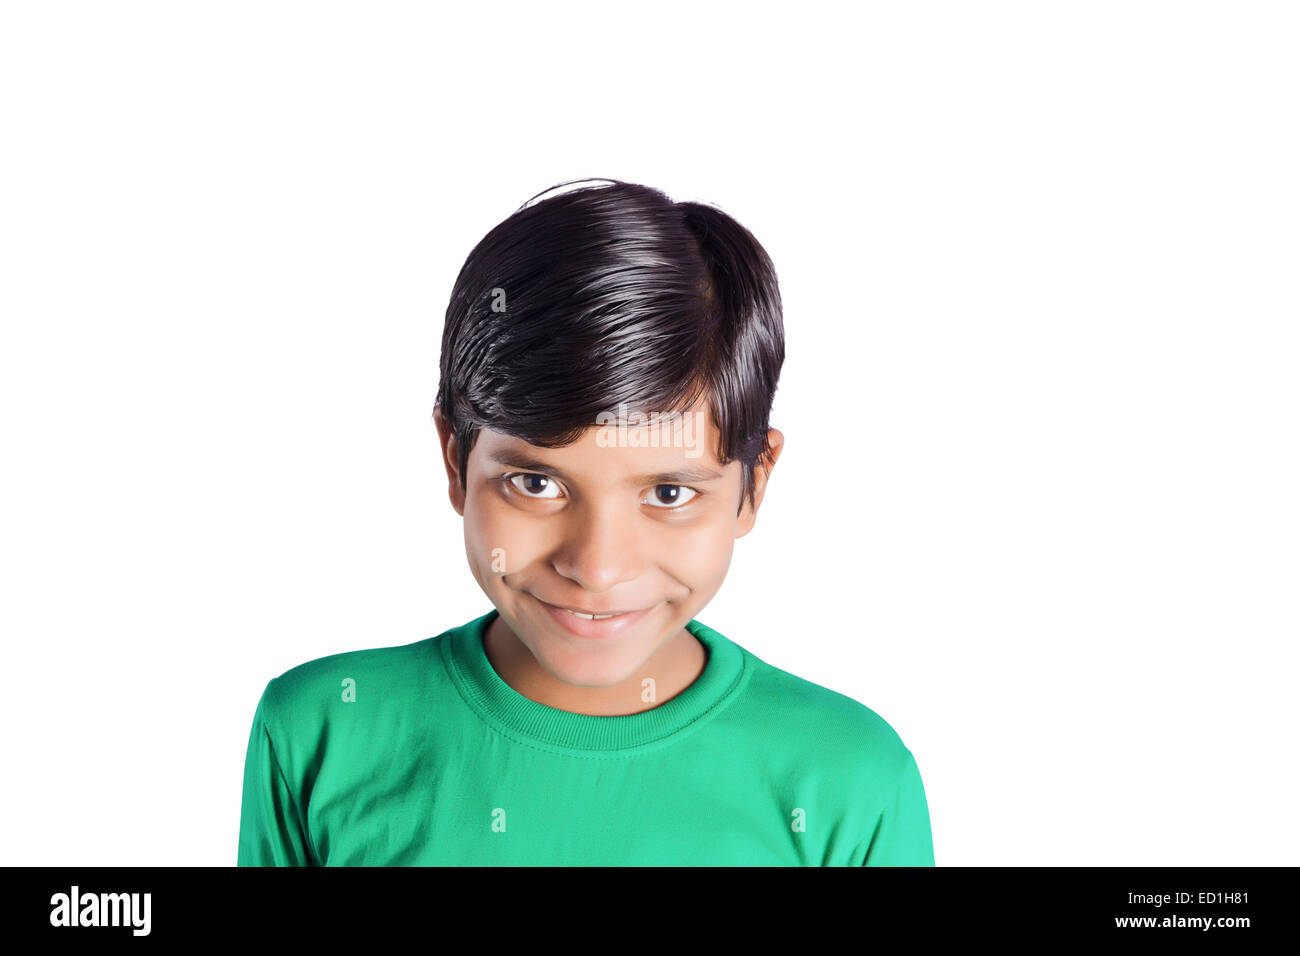 1 indian child boy pose Stock Photo